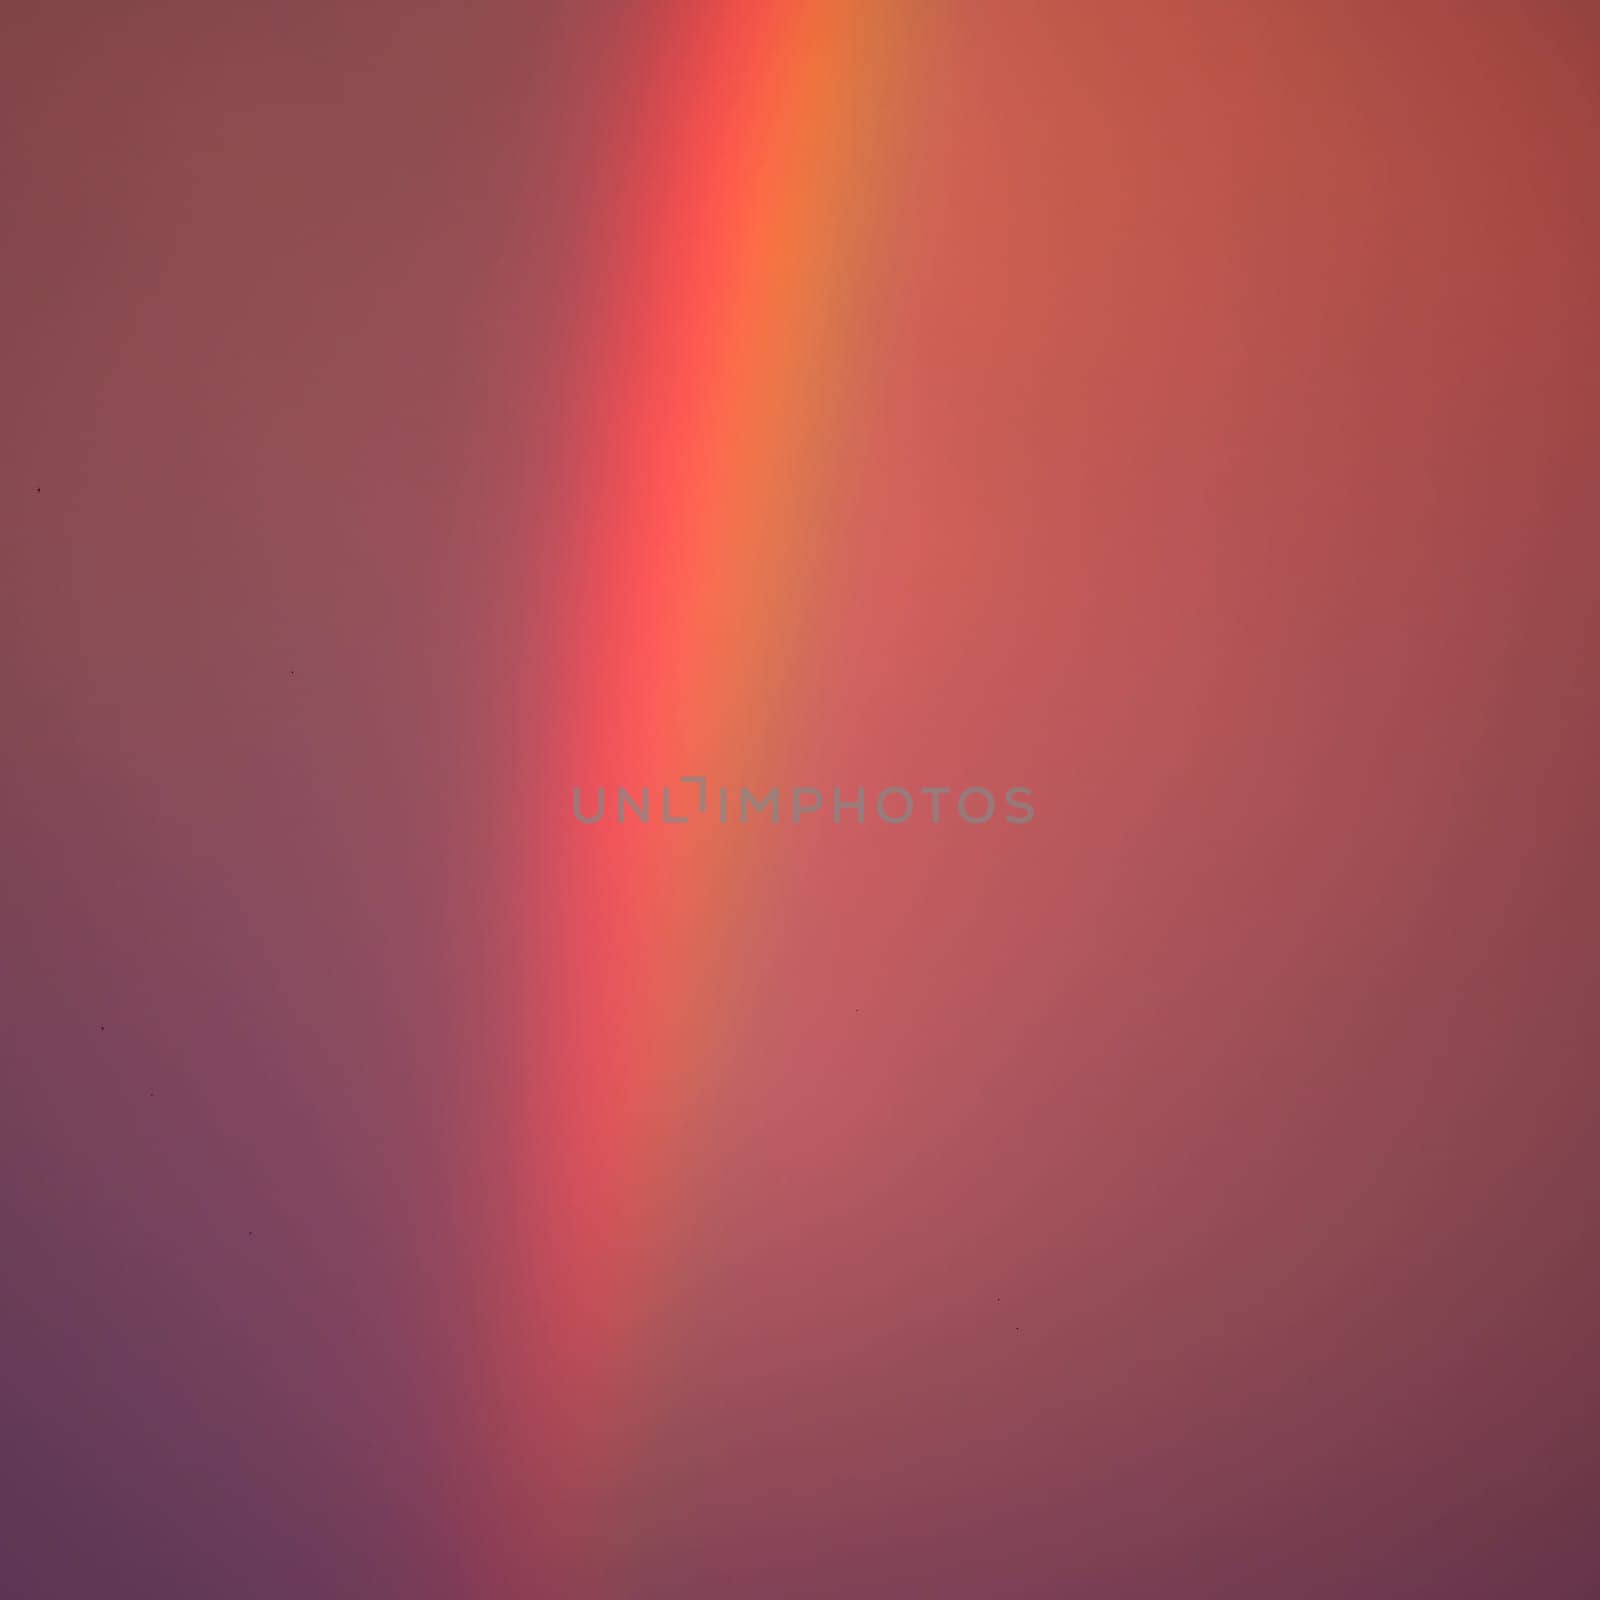 Rainbow against the sunset sky by EvgeniyQW